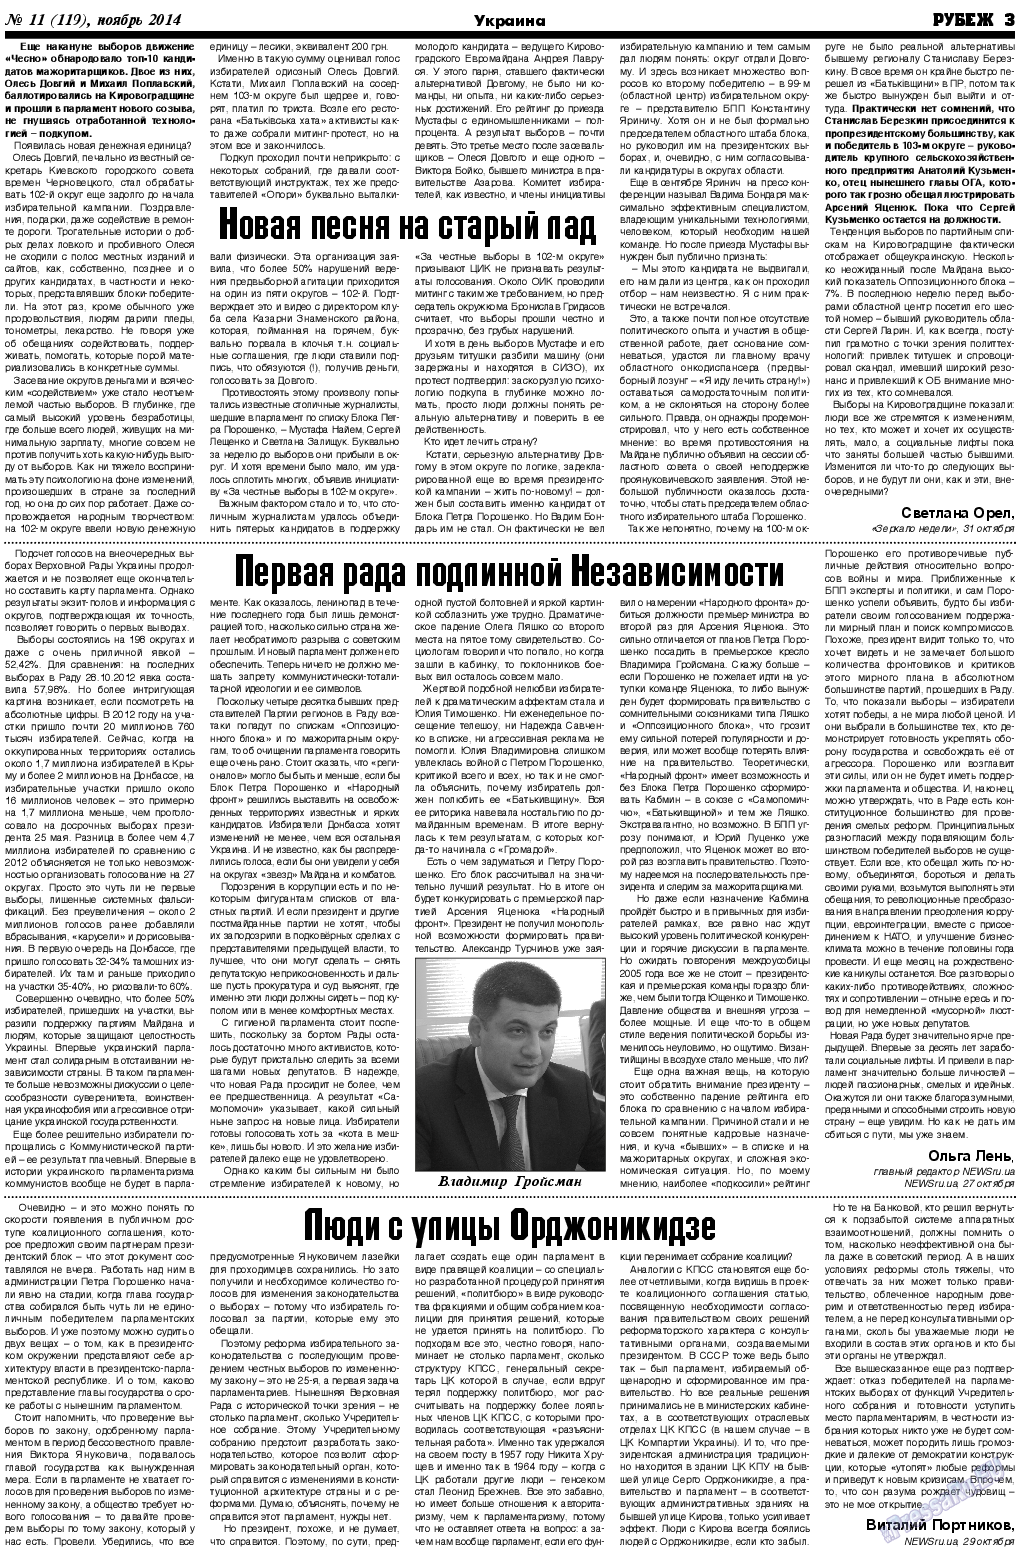 Рубеж, газета. 2014 №11 стр.3